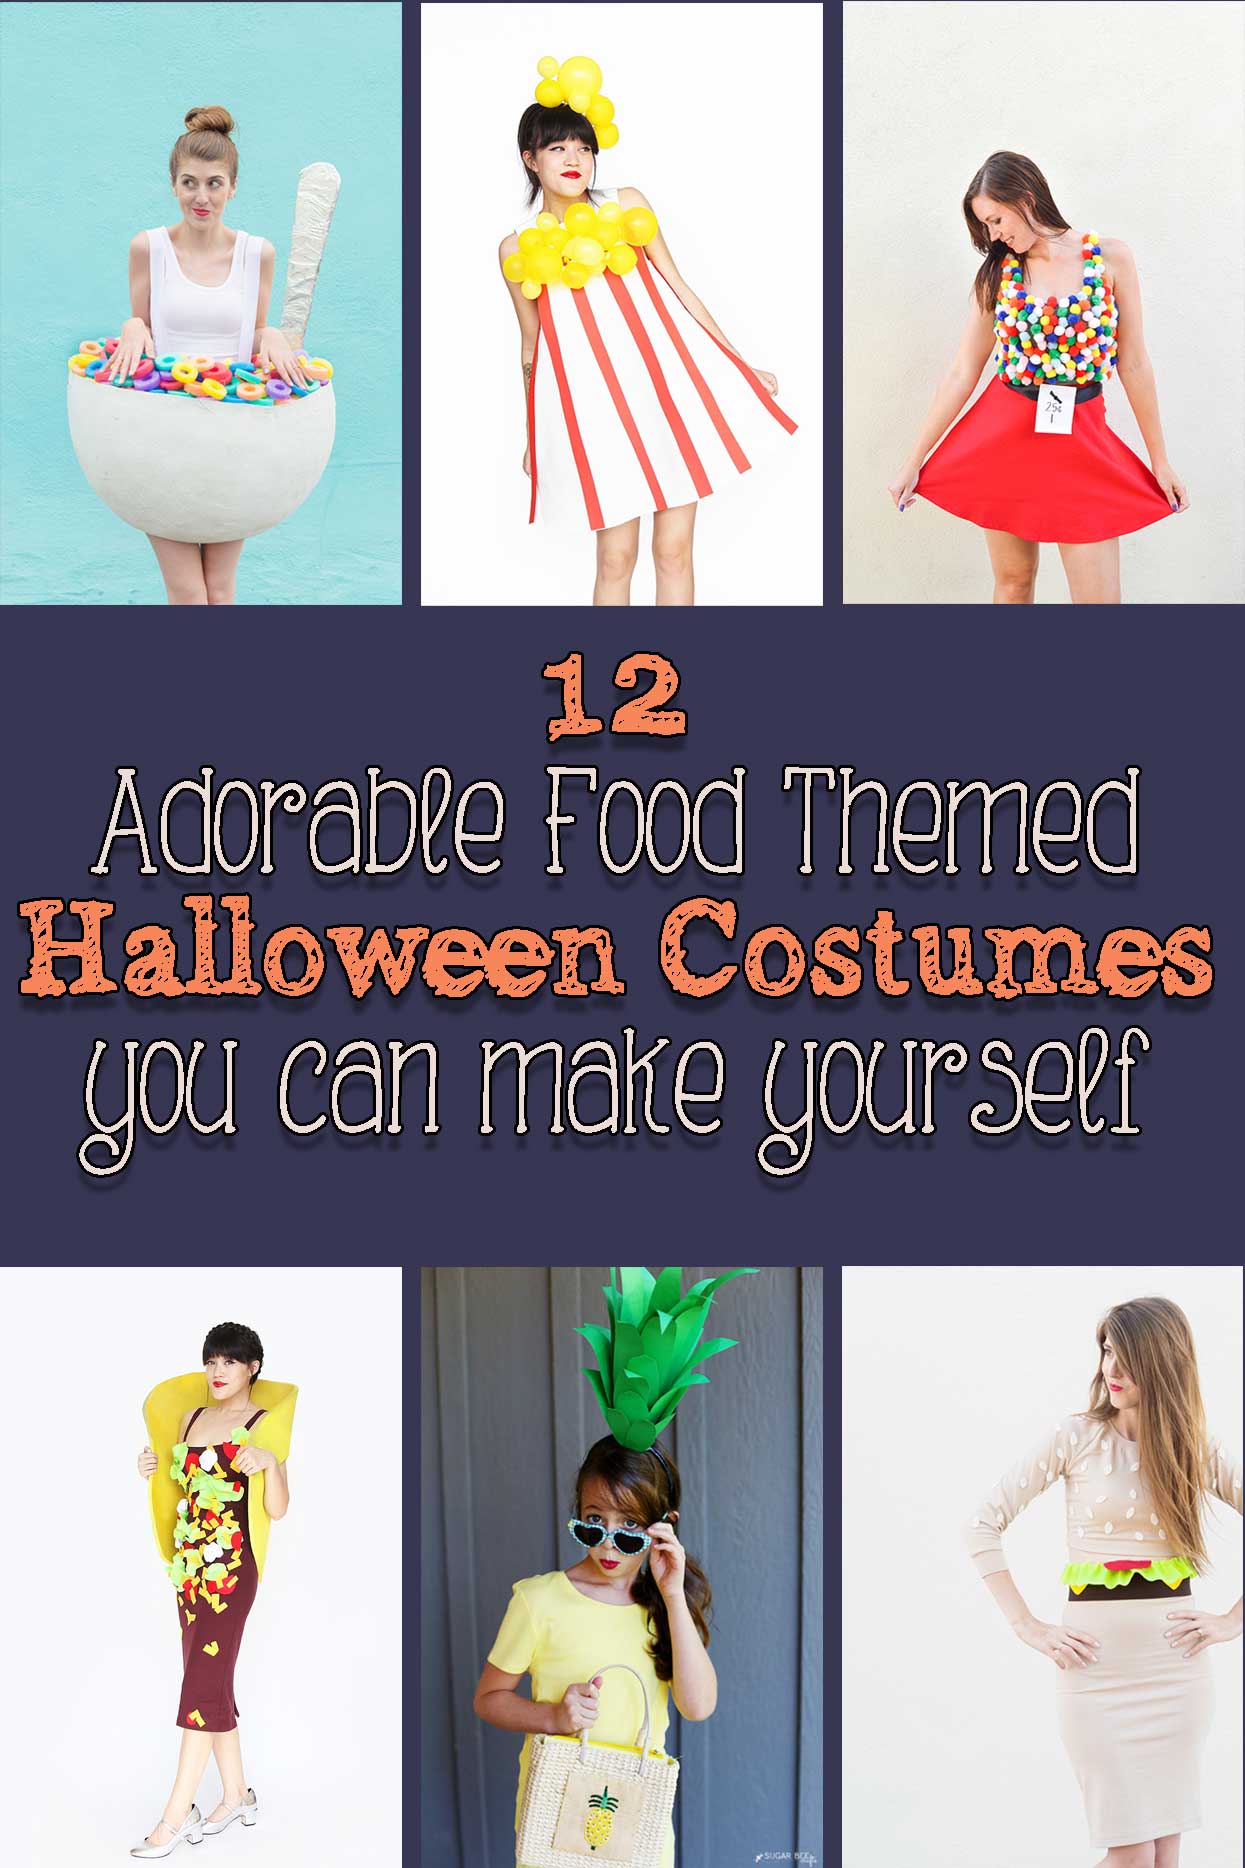 Food halloween costumes